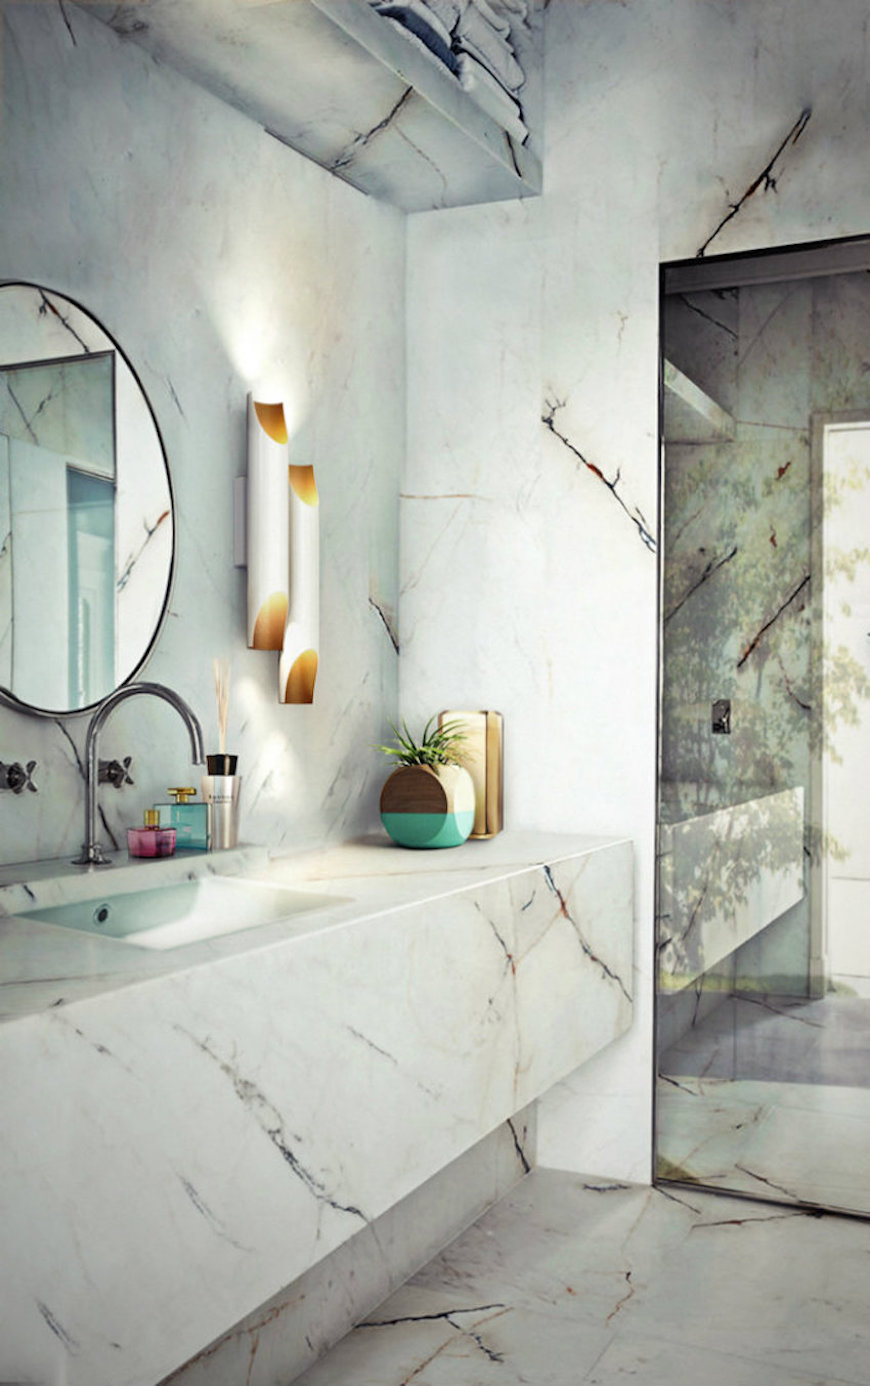 10 Lighting Design Ideas to Embellishing your Industrial Bathroom ➤To see more Luxury Bathroom ideas visit us at www.luxurybathrooms.eu #luxurybathrooms #homedecorideas #bathroomideas @BathroomsLuxury